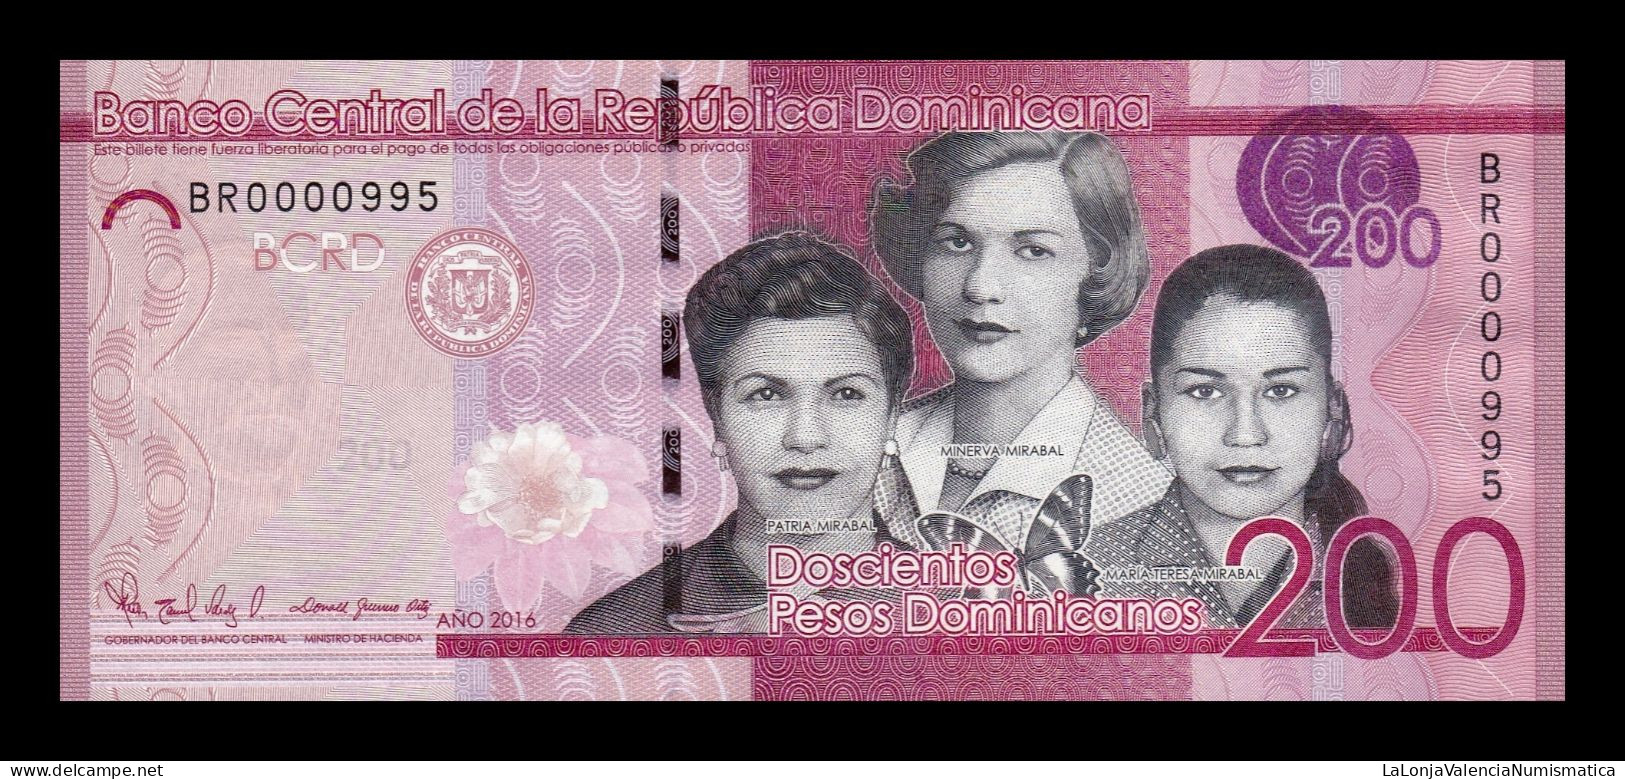 República Dominicana 200 Pesos Dominicanos 2016 Pick 191c Low Serial 995 Sc Unc - Repubblica Dominicana